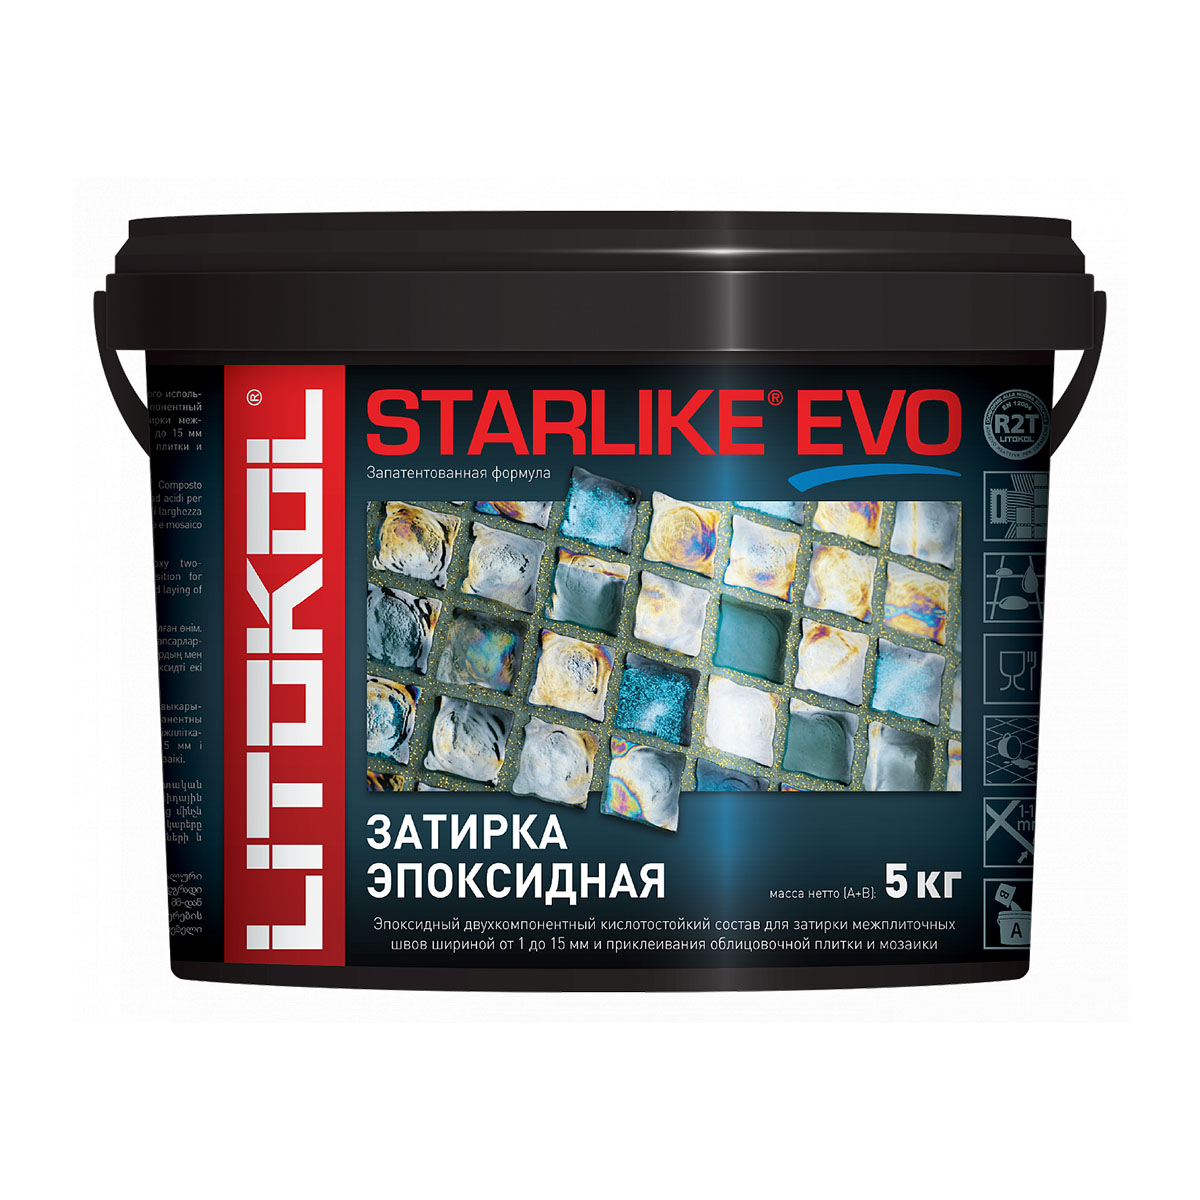 Затирка эпоксидная 2-х комп. "starlike evo" s.140 nero grafite, ведро 5 кг (1) litokol